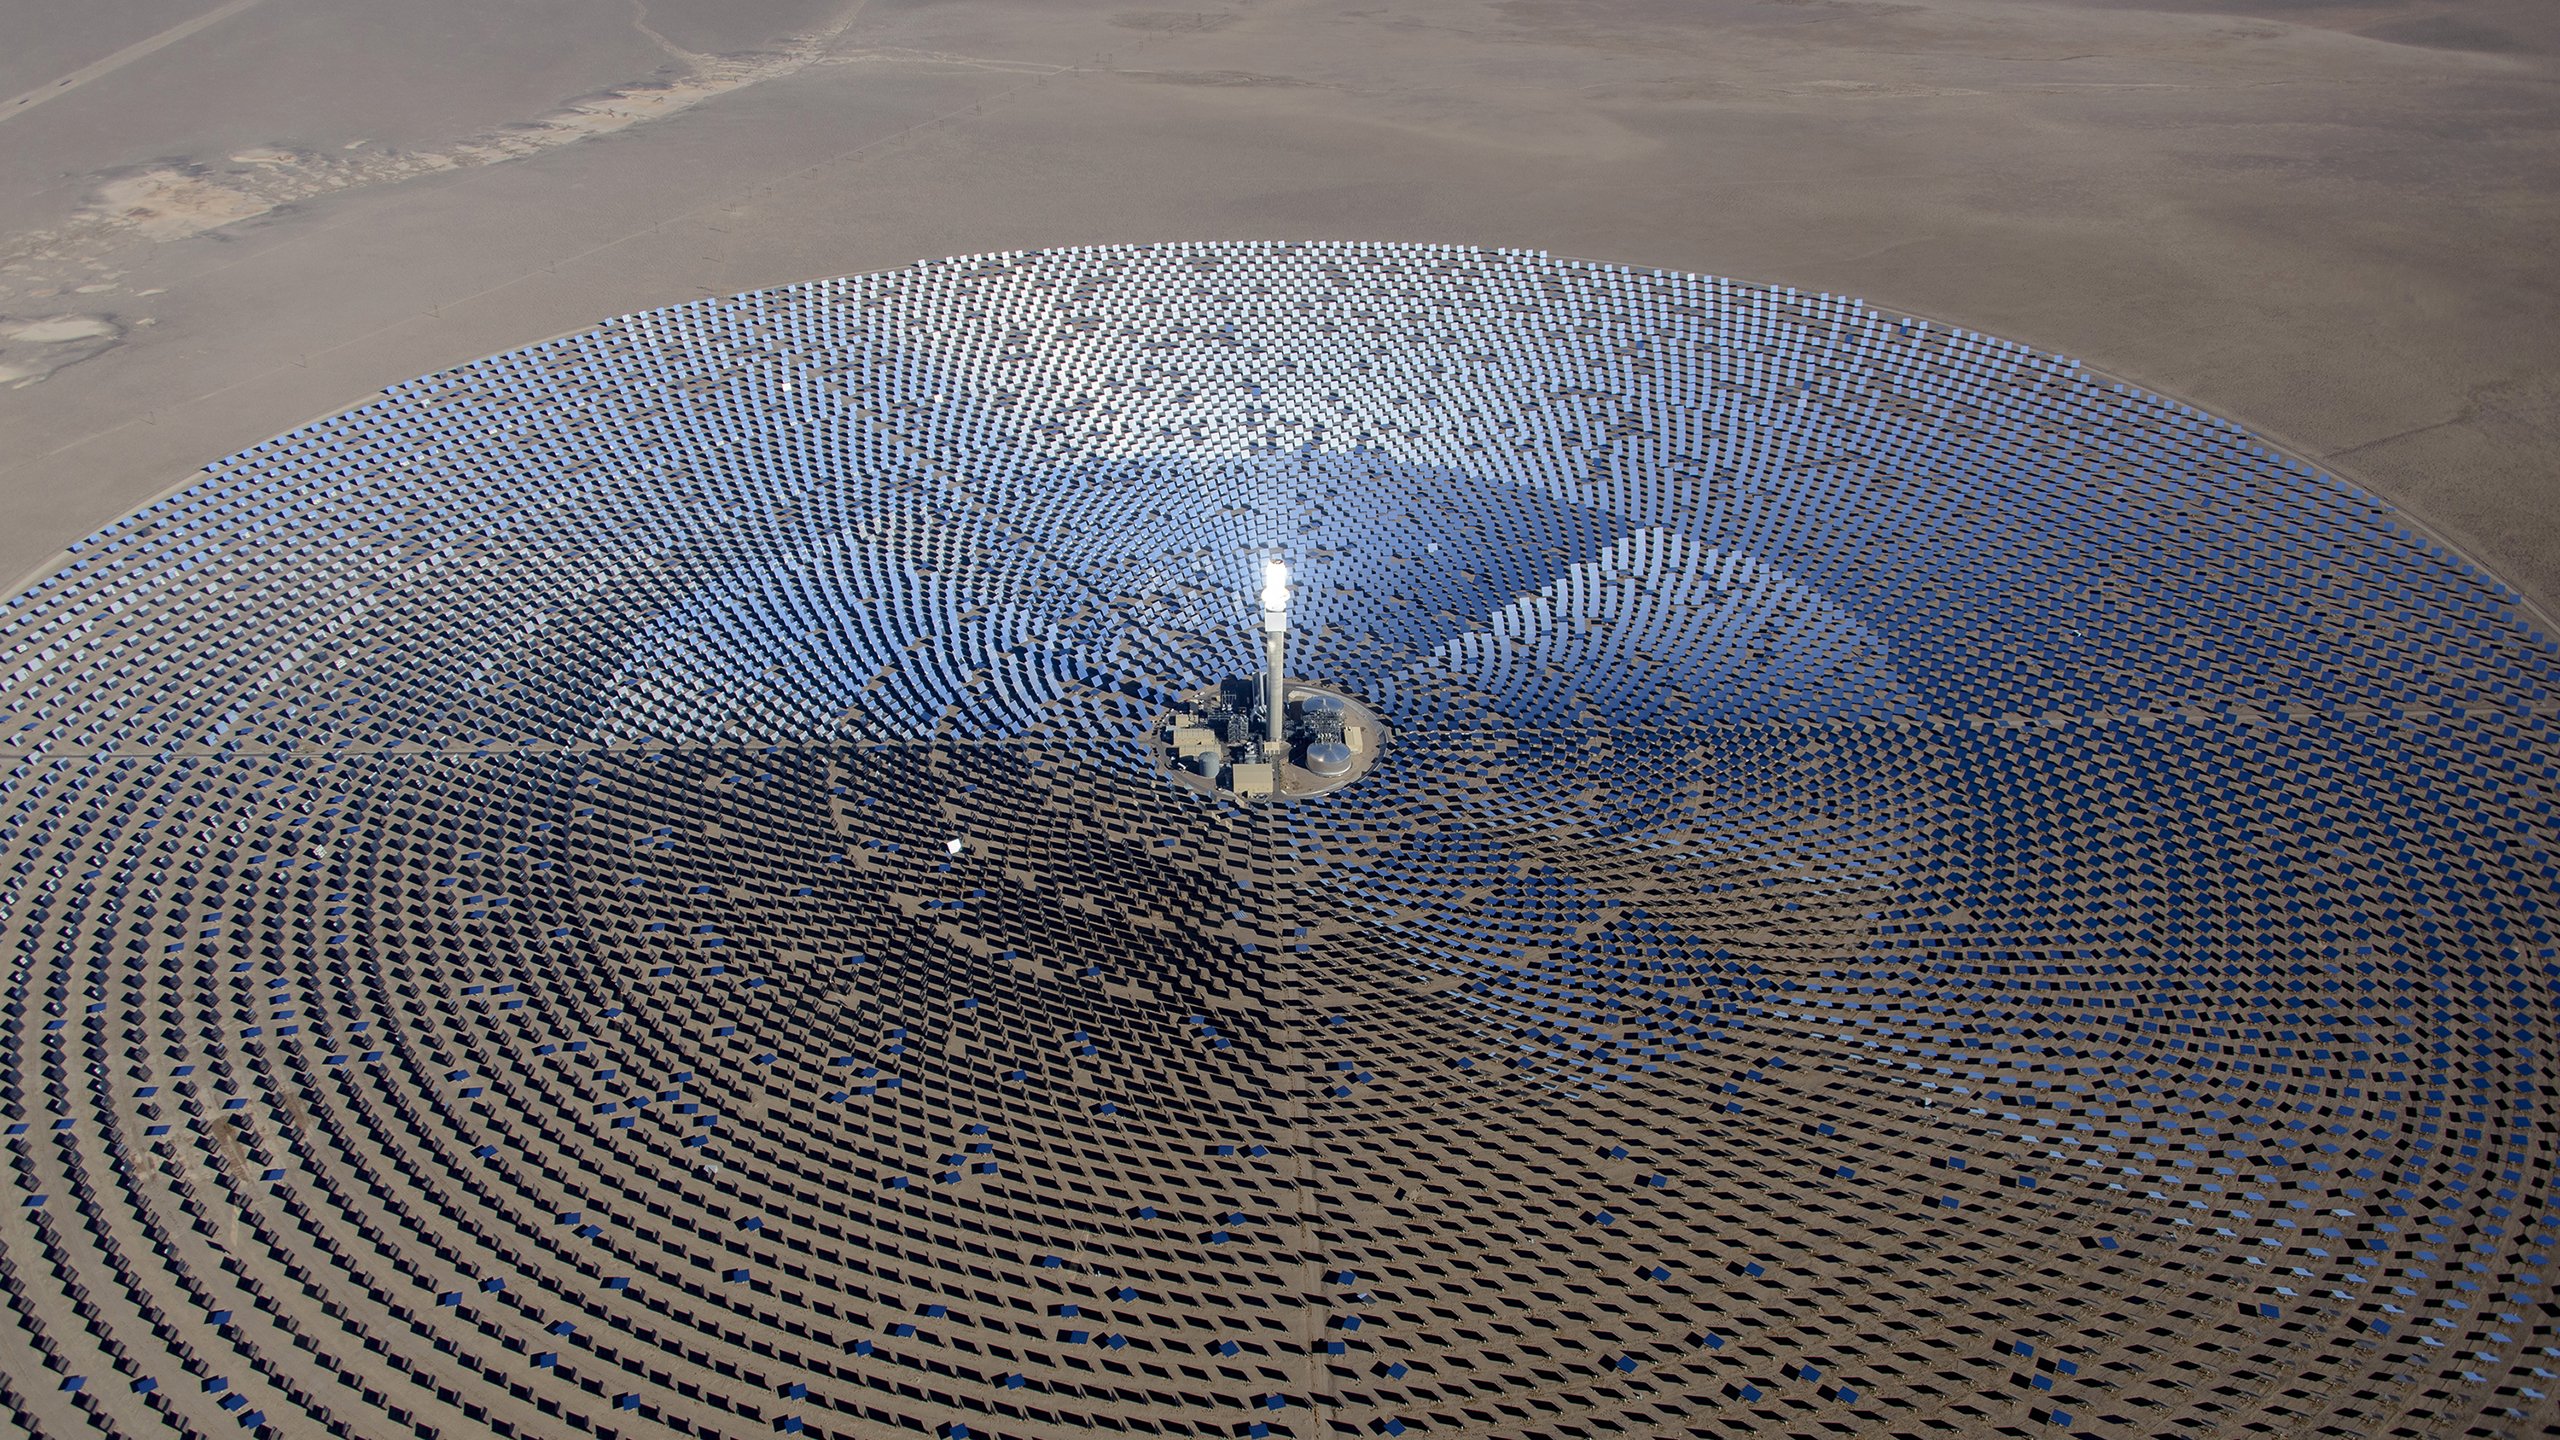 Wallpaper, solar power, power plant, technology, desert, aerial view 2560x1440